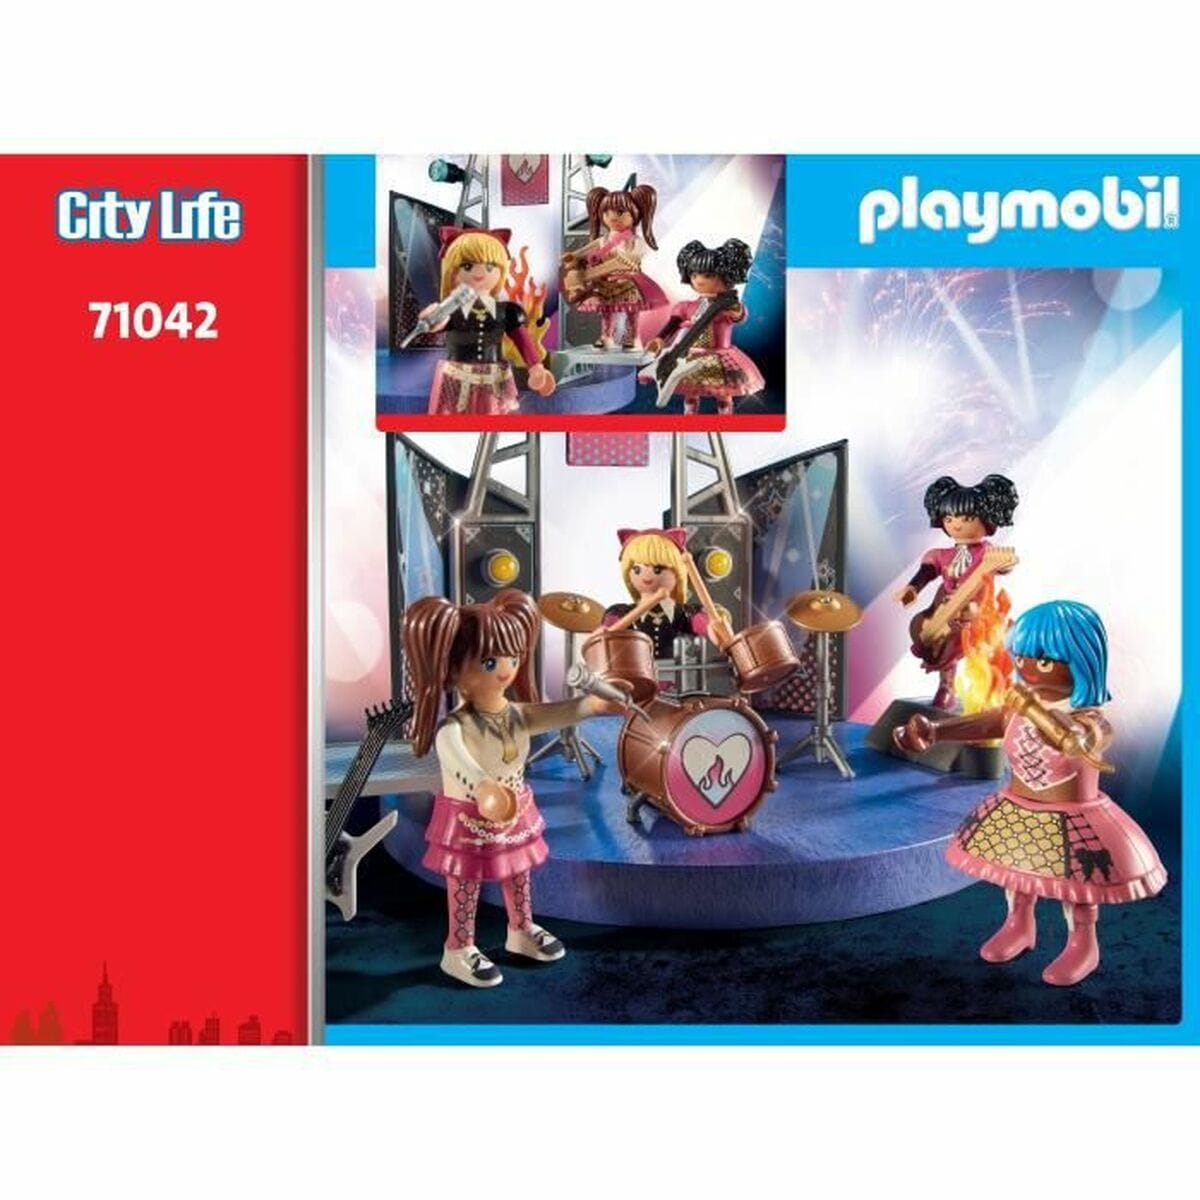 Playmobil Spielzeug | Kostüme > Spielzeug und Spiele > Action-Figuren Playset Playmobil City Life